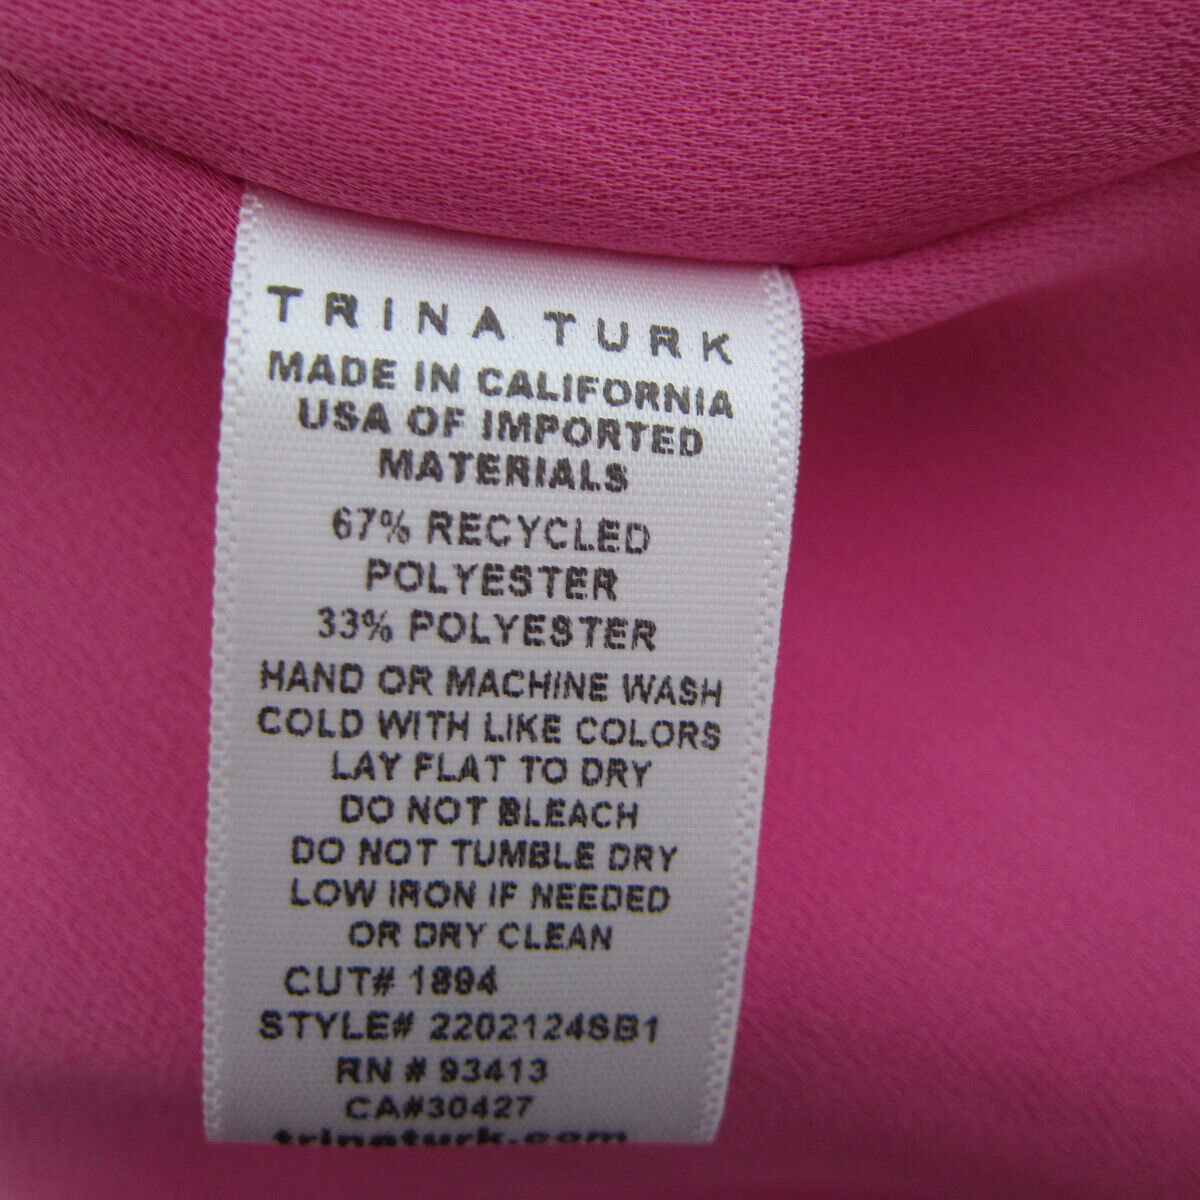 TRINA TURK Pink Kimono Style Split Sleeve Top wit… - image 7